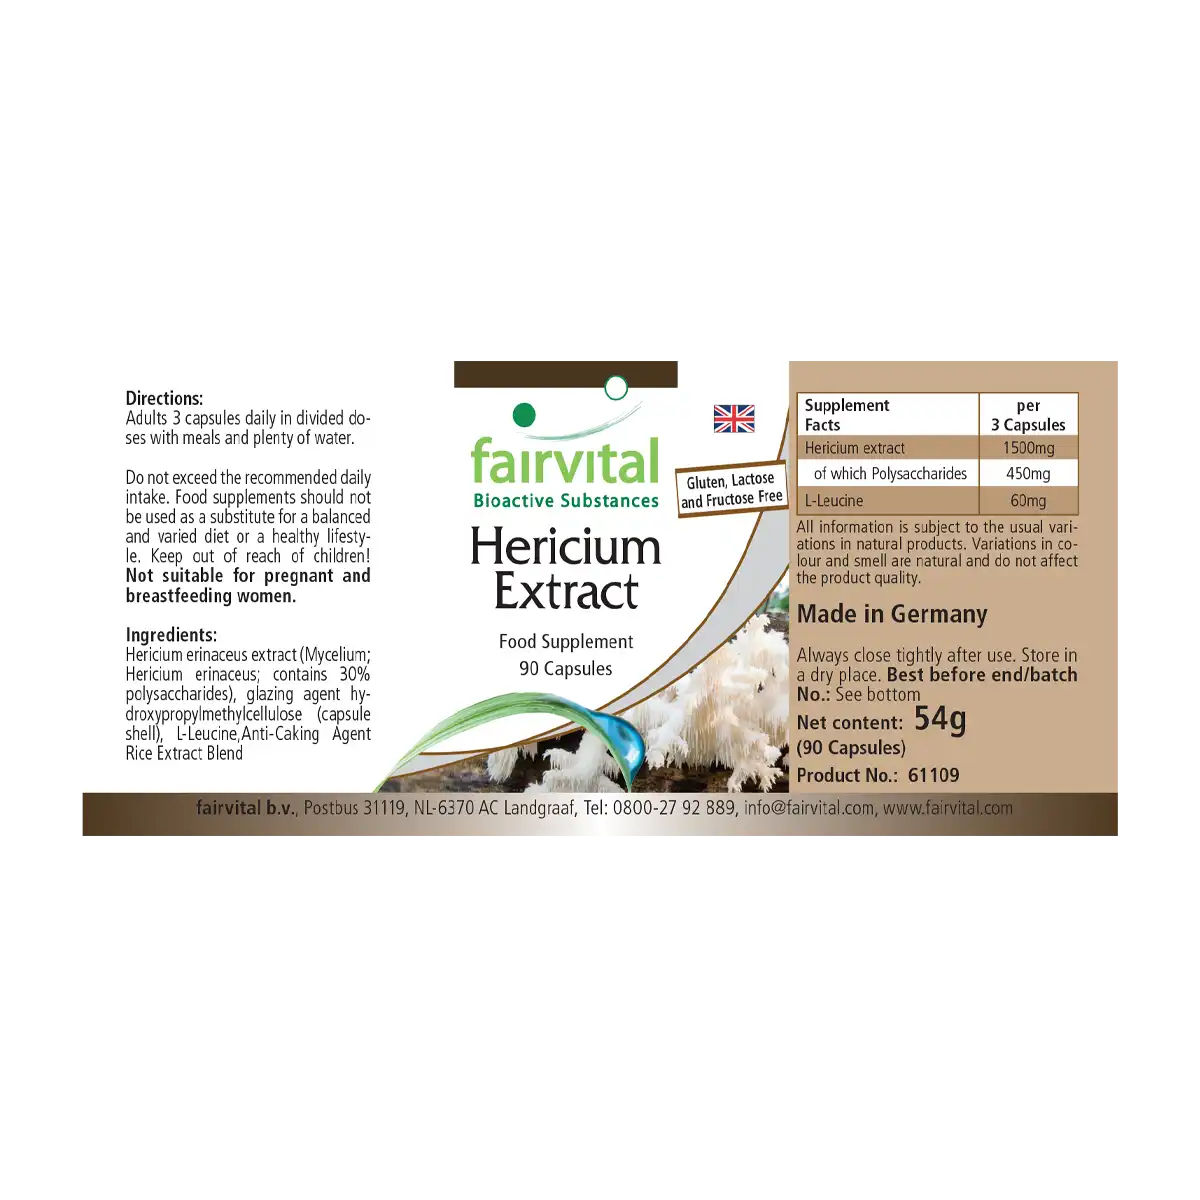 Hericium Extrakt 500mg